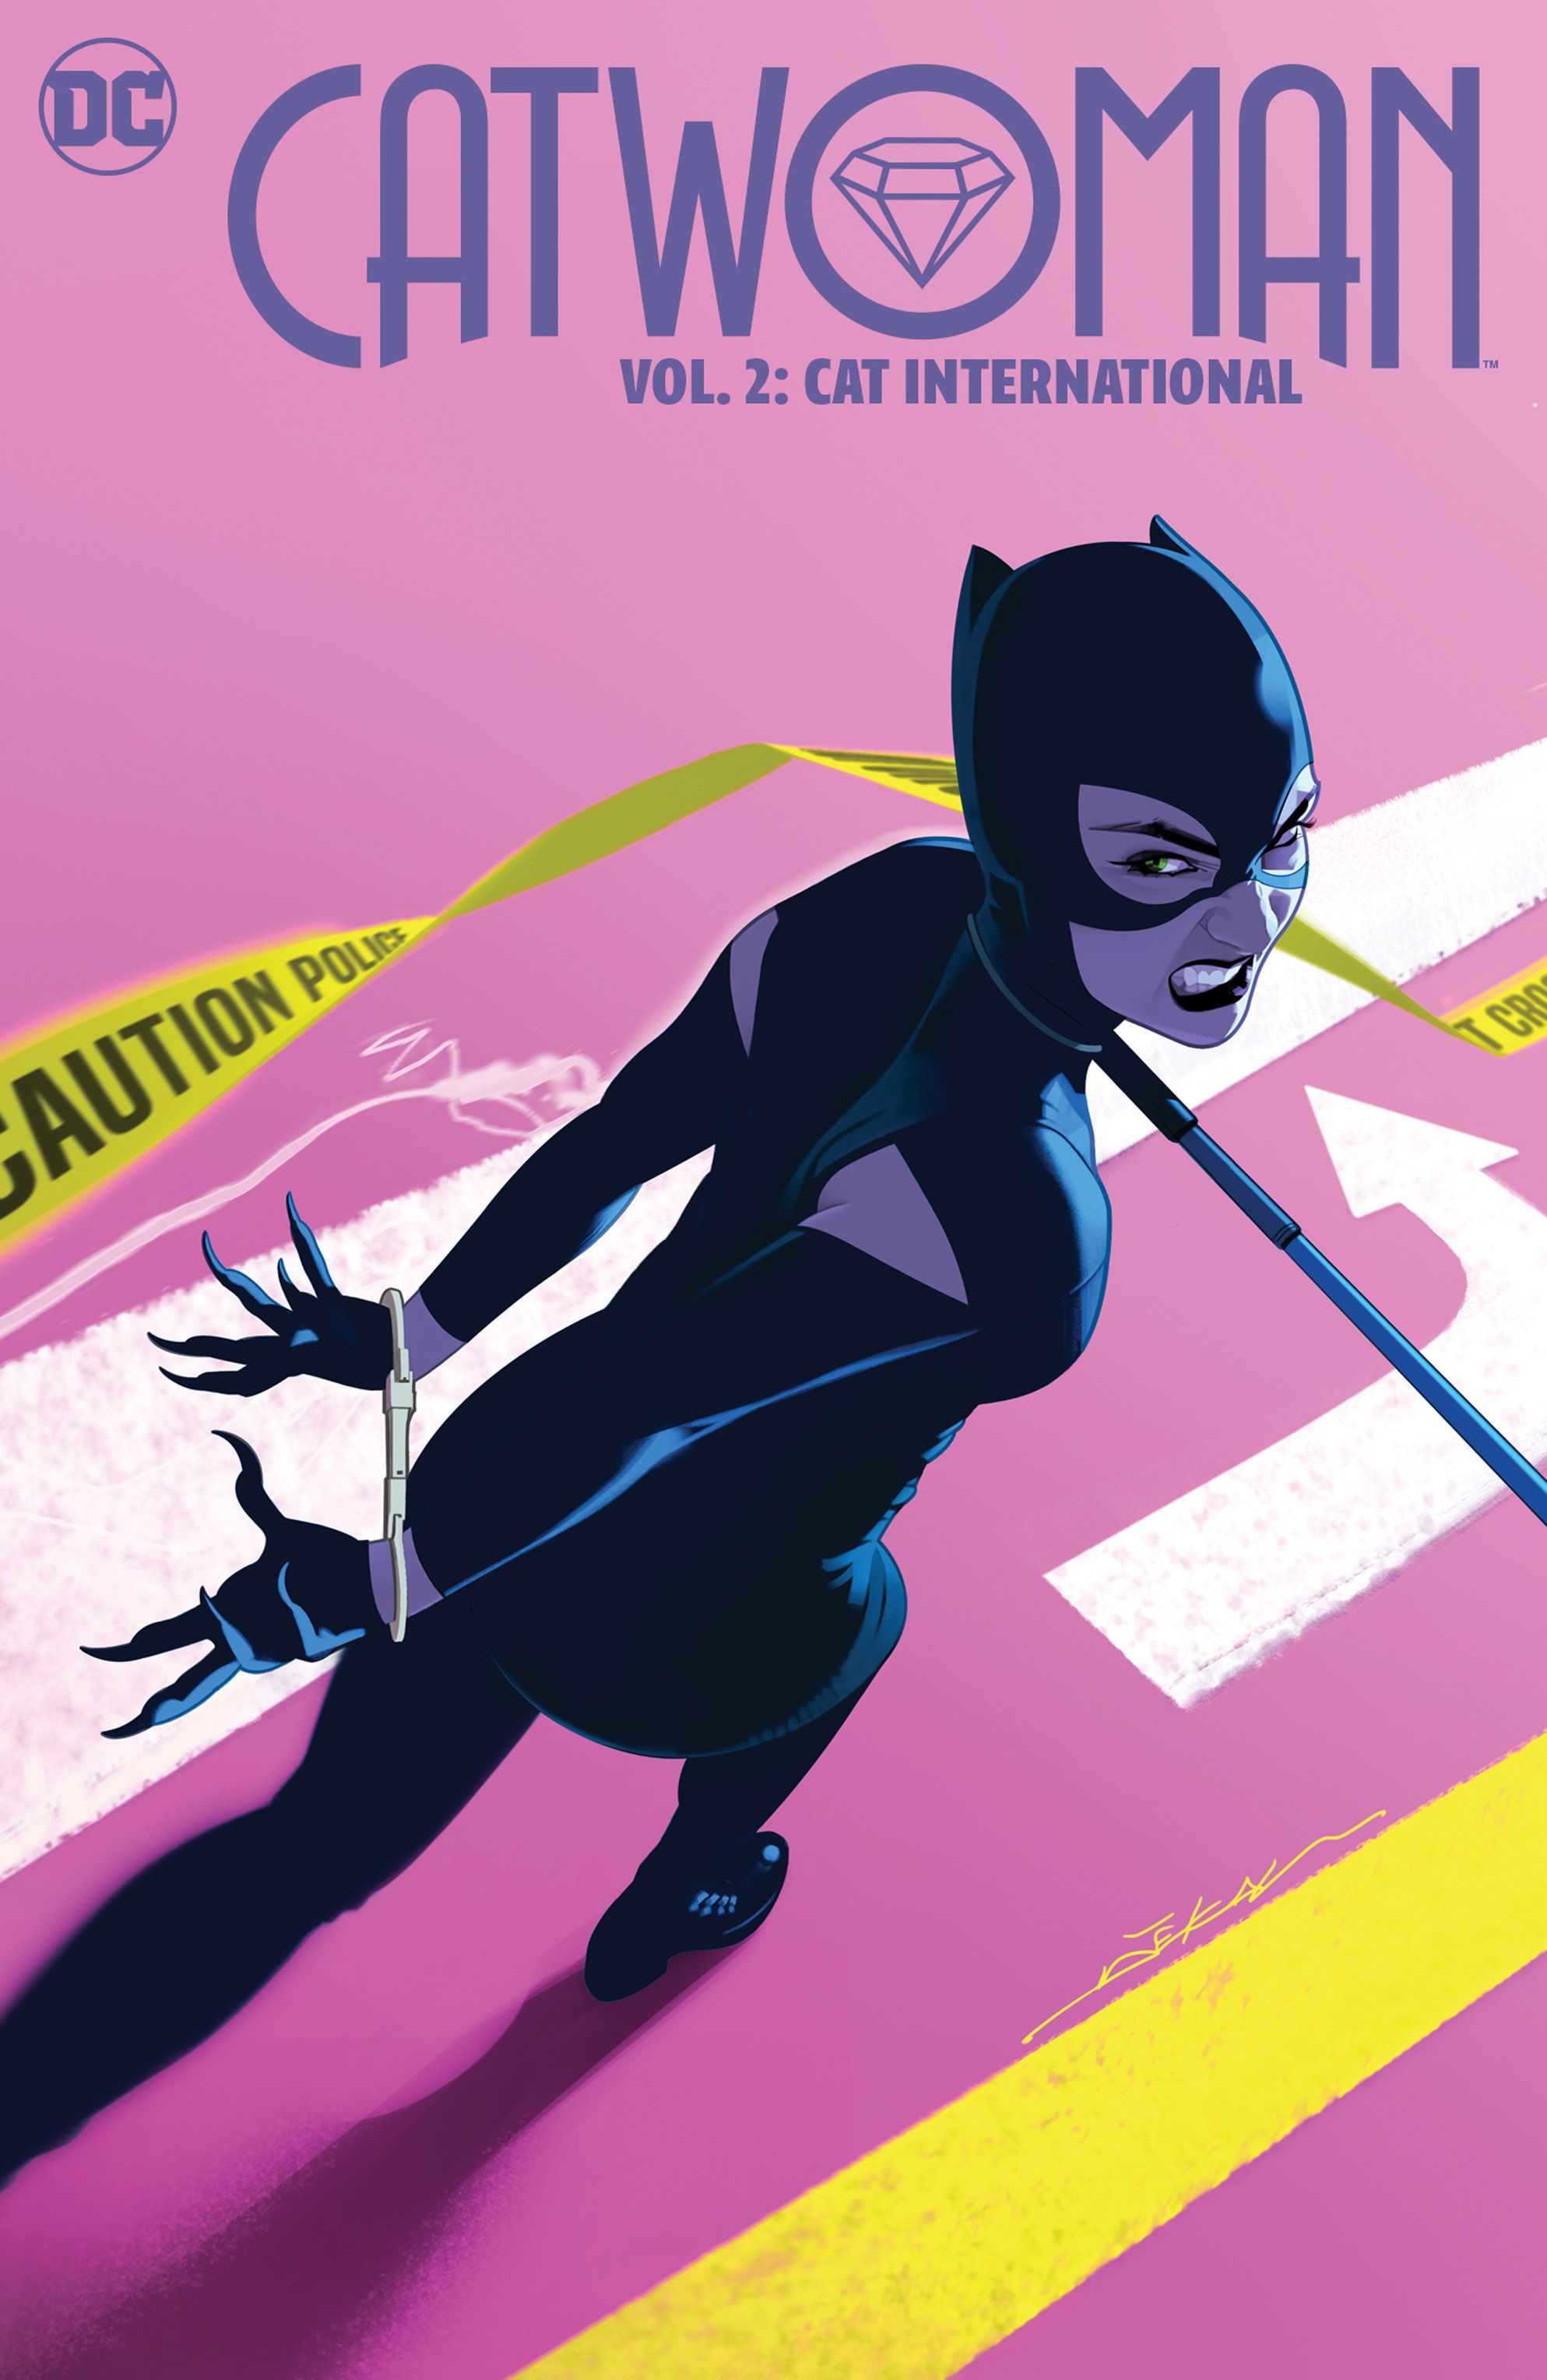 Catwoman Vol 2 Cat International